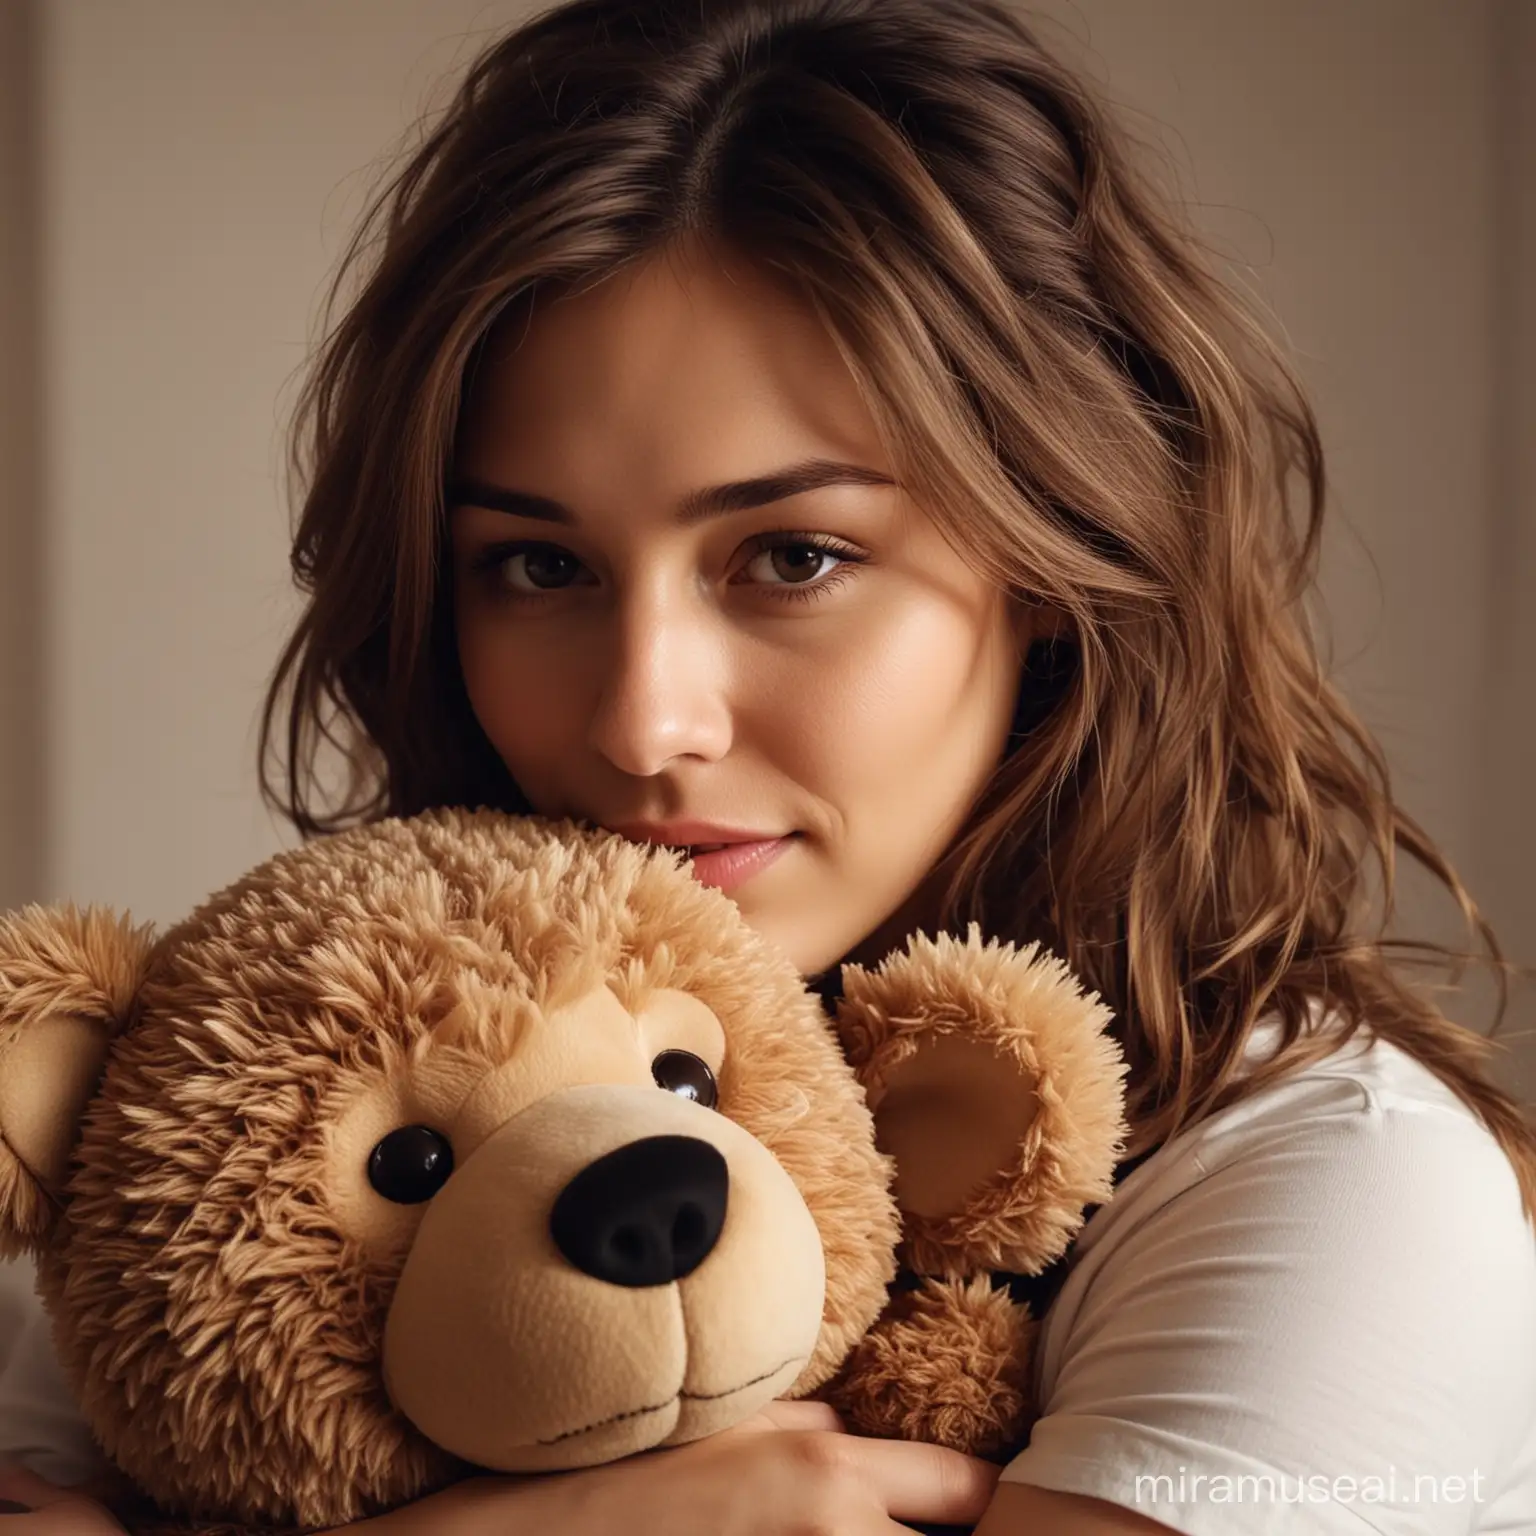  a woman hugging teddy bear, woman's face visible  medium hair  , photography, Cinematic lighting, Romance scene --hd